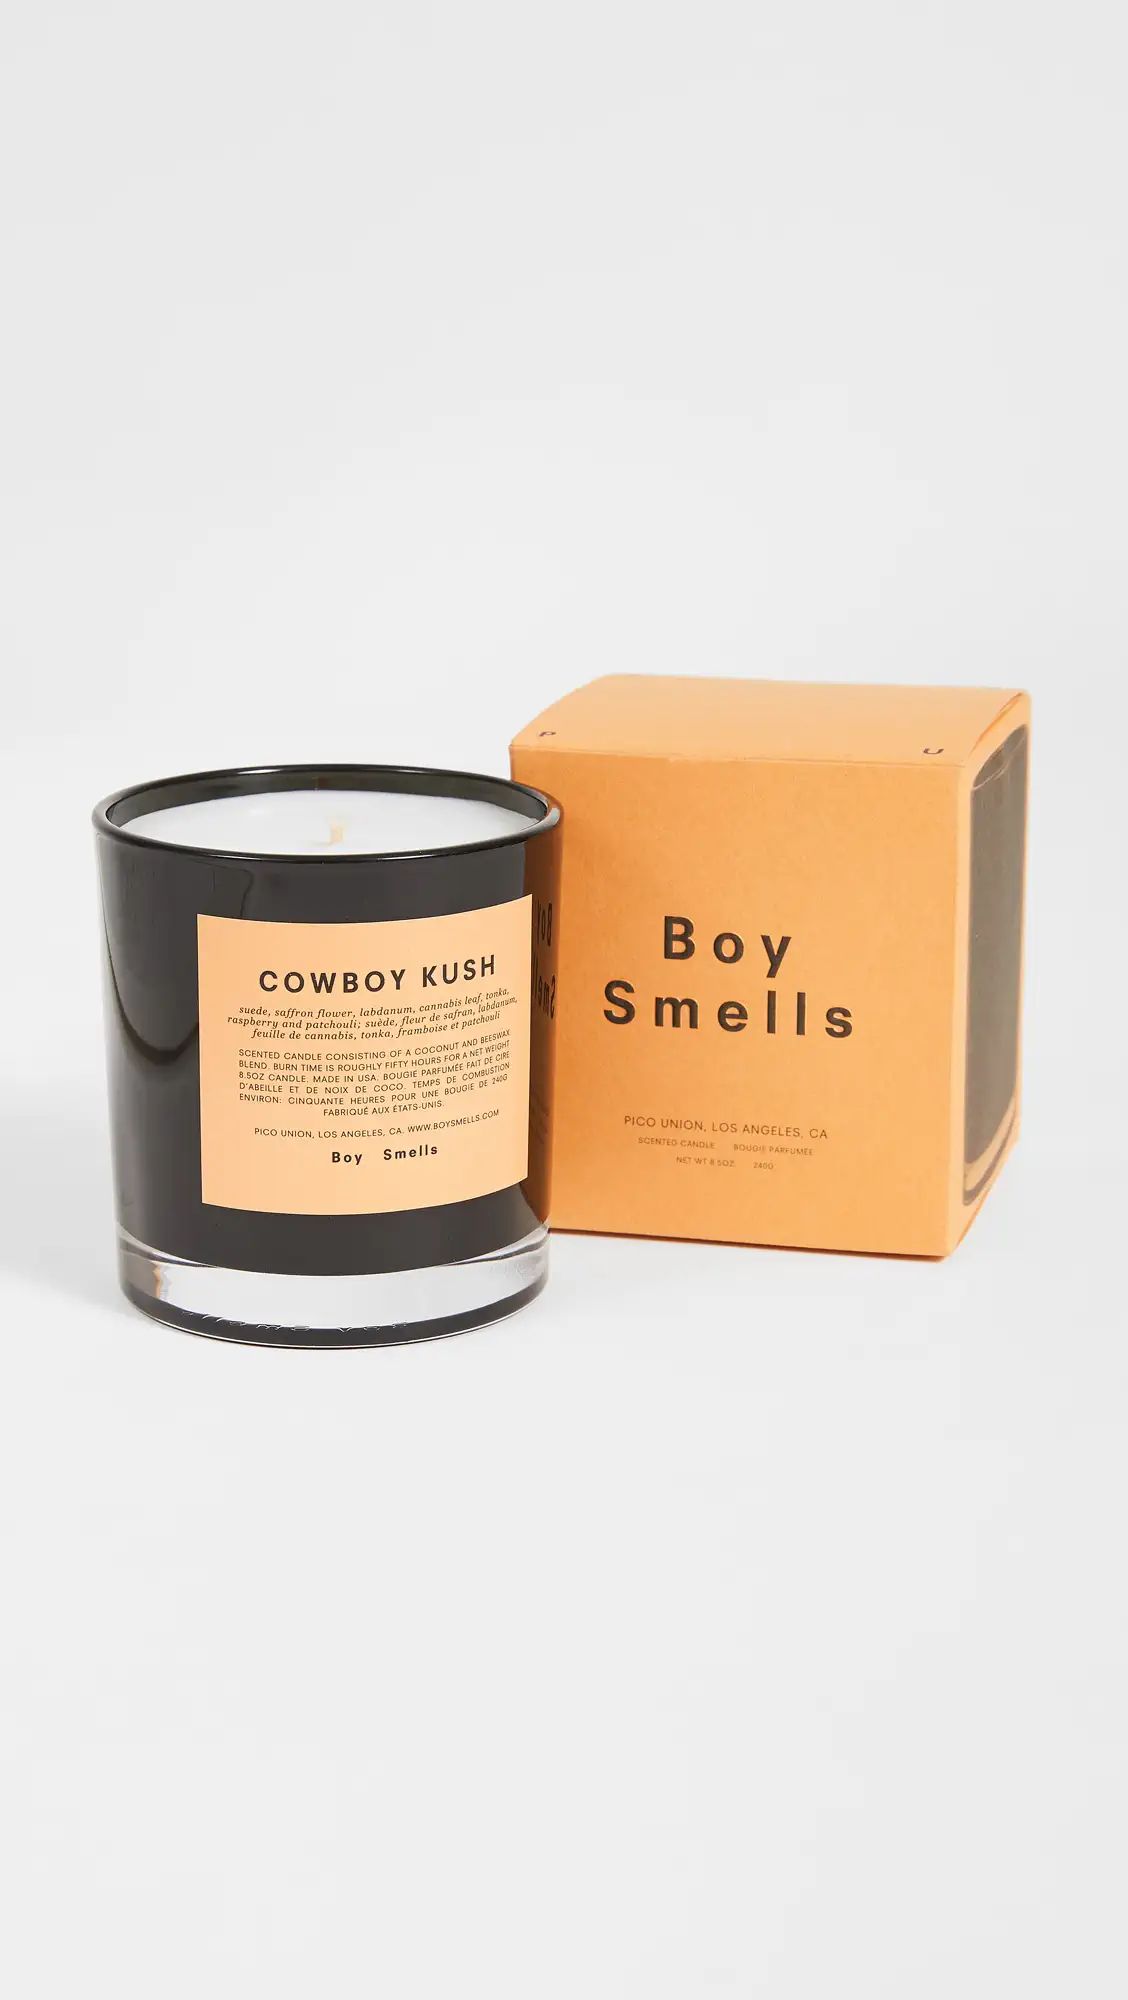 Boy Smells Cowboy Kush Candle | Shopbop | Shopbop